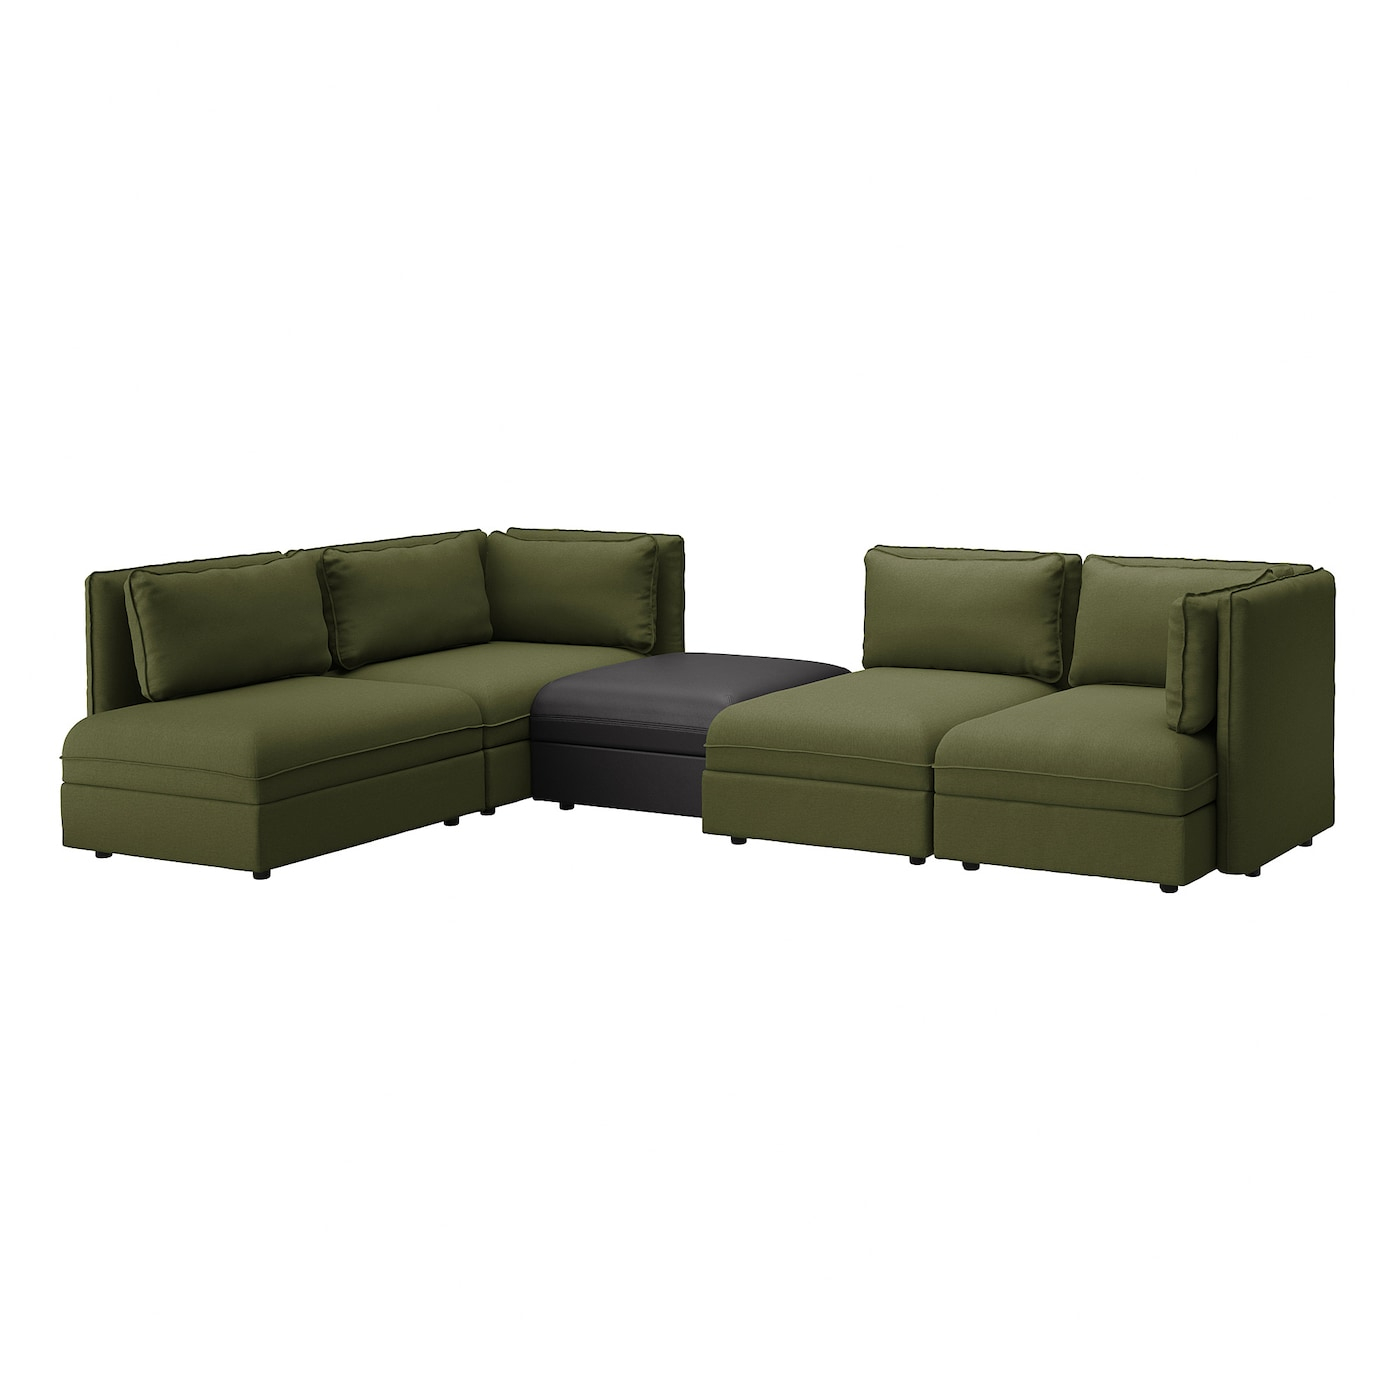 Modular Corner Sofa 4 Seat Vallentuna With Storage Orrstamurum Olive Greenblack throughout sizing 1400 X 1400